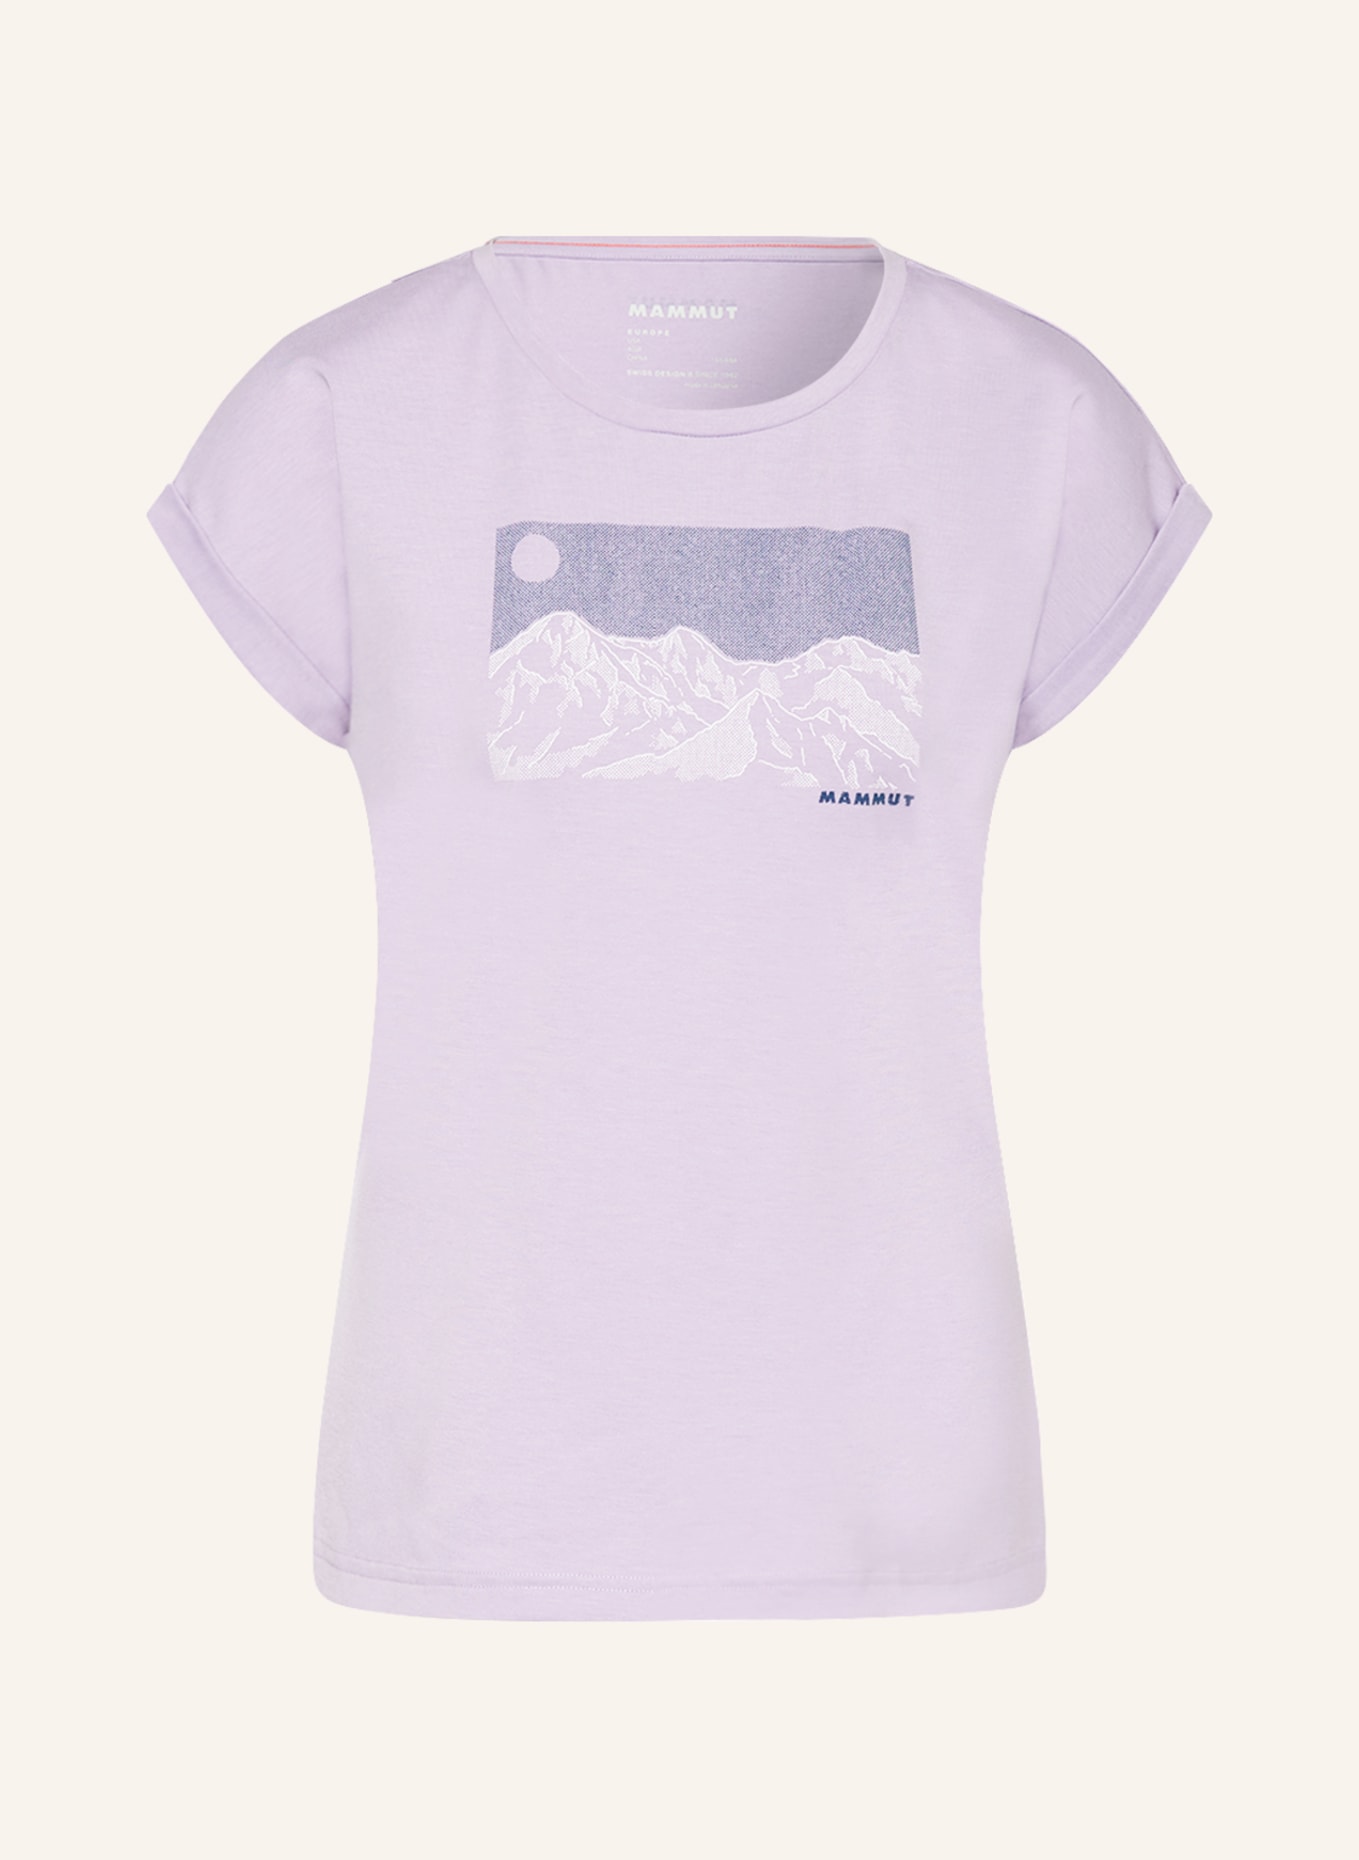 MAMMUT T-shirt MOUNTAIN TRILOGY with UV protection 50+, Color: LIGHT PURPLE/ DARK PURPLE/ WHITE (Image 1)